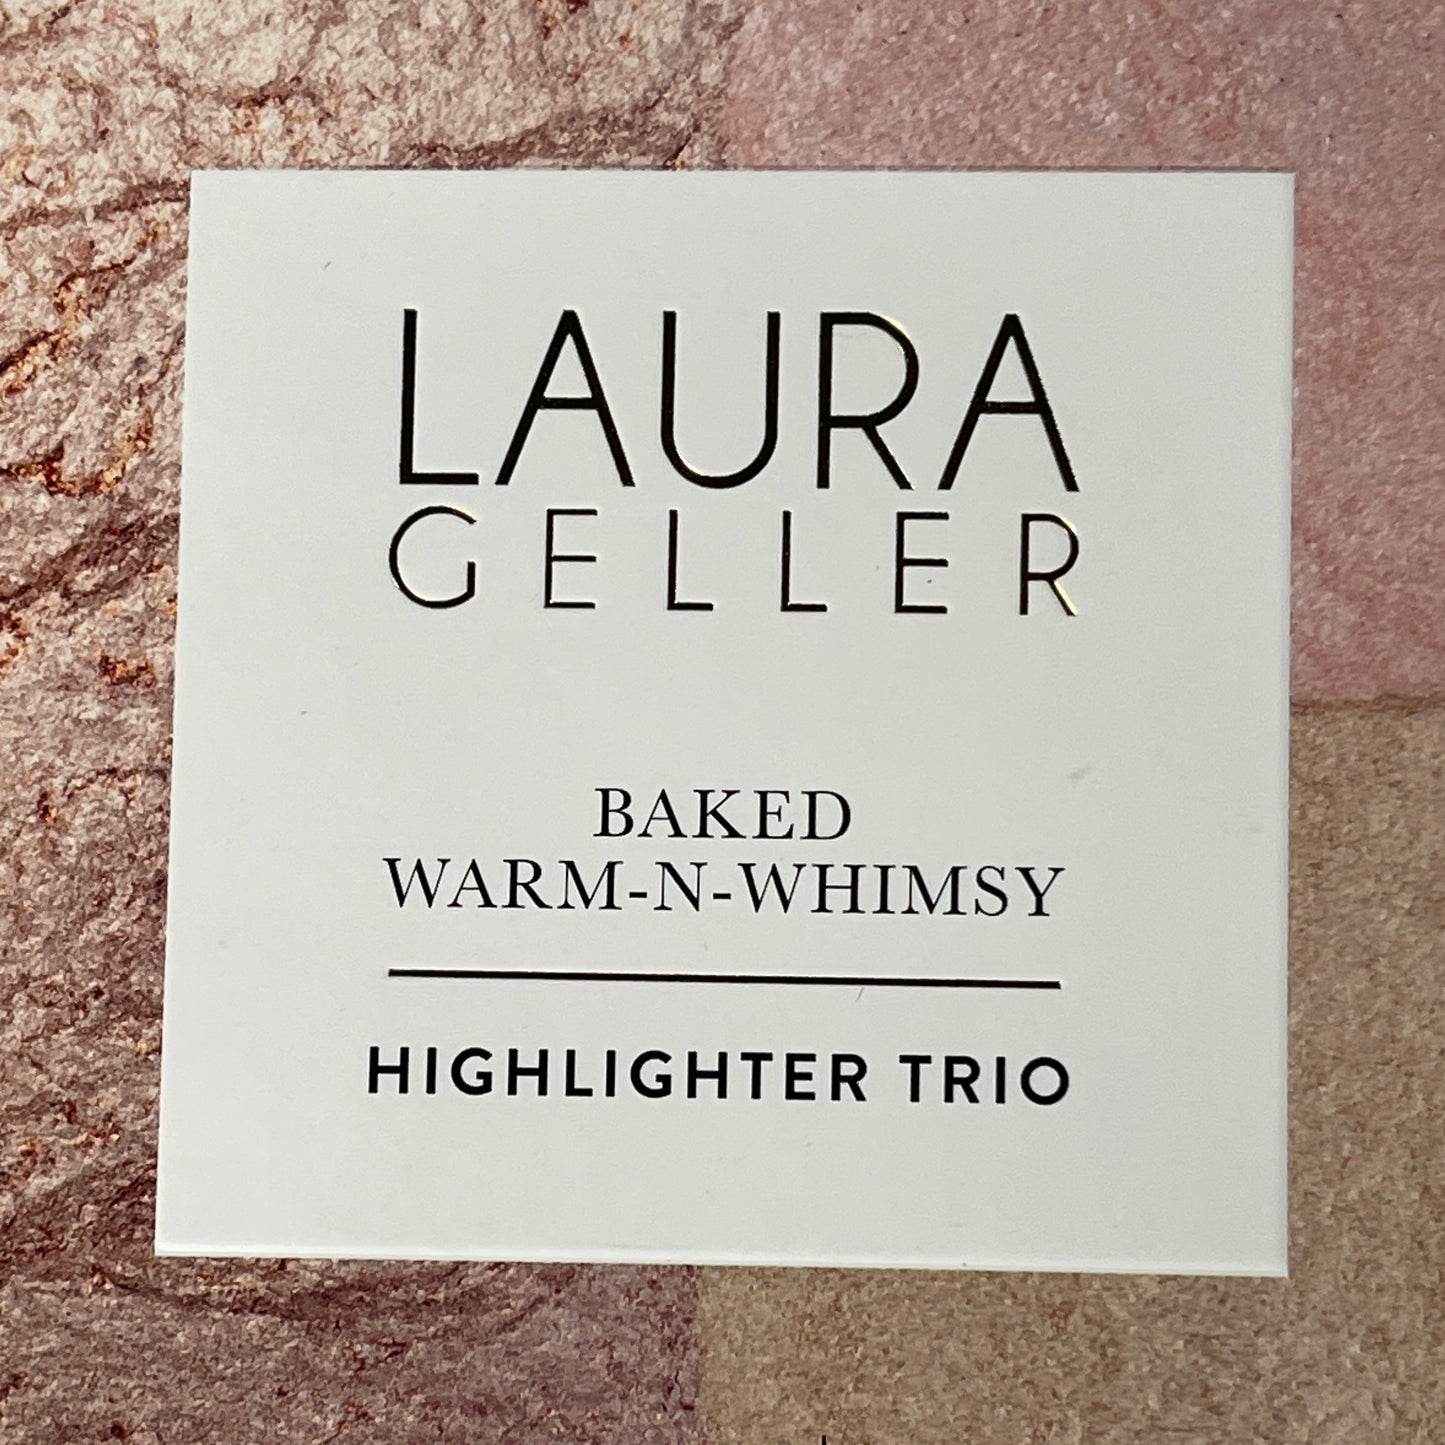 LAURA GELLER Baked Warm-N-Whimsy Highlighter Trio 0.74 oz 24K, Angel & Suger Glow 0105-0042006 (New)